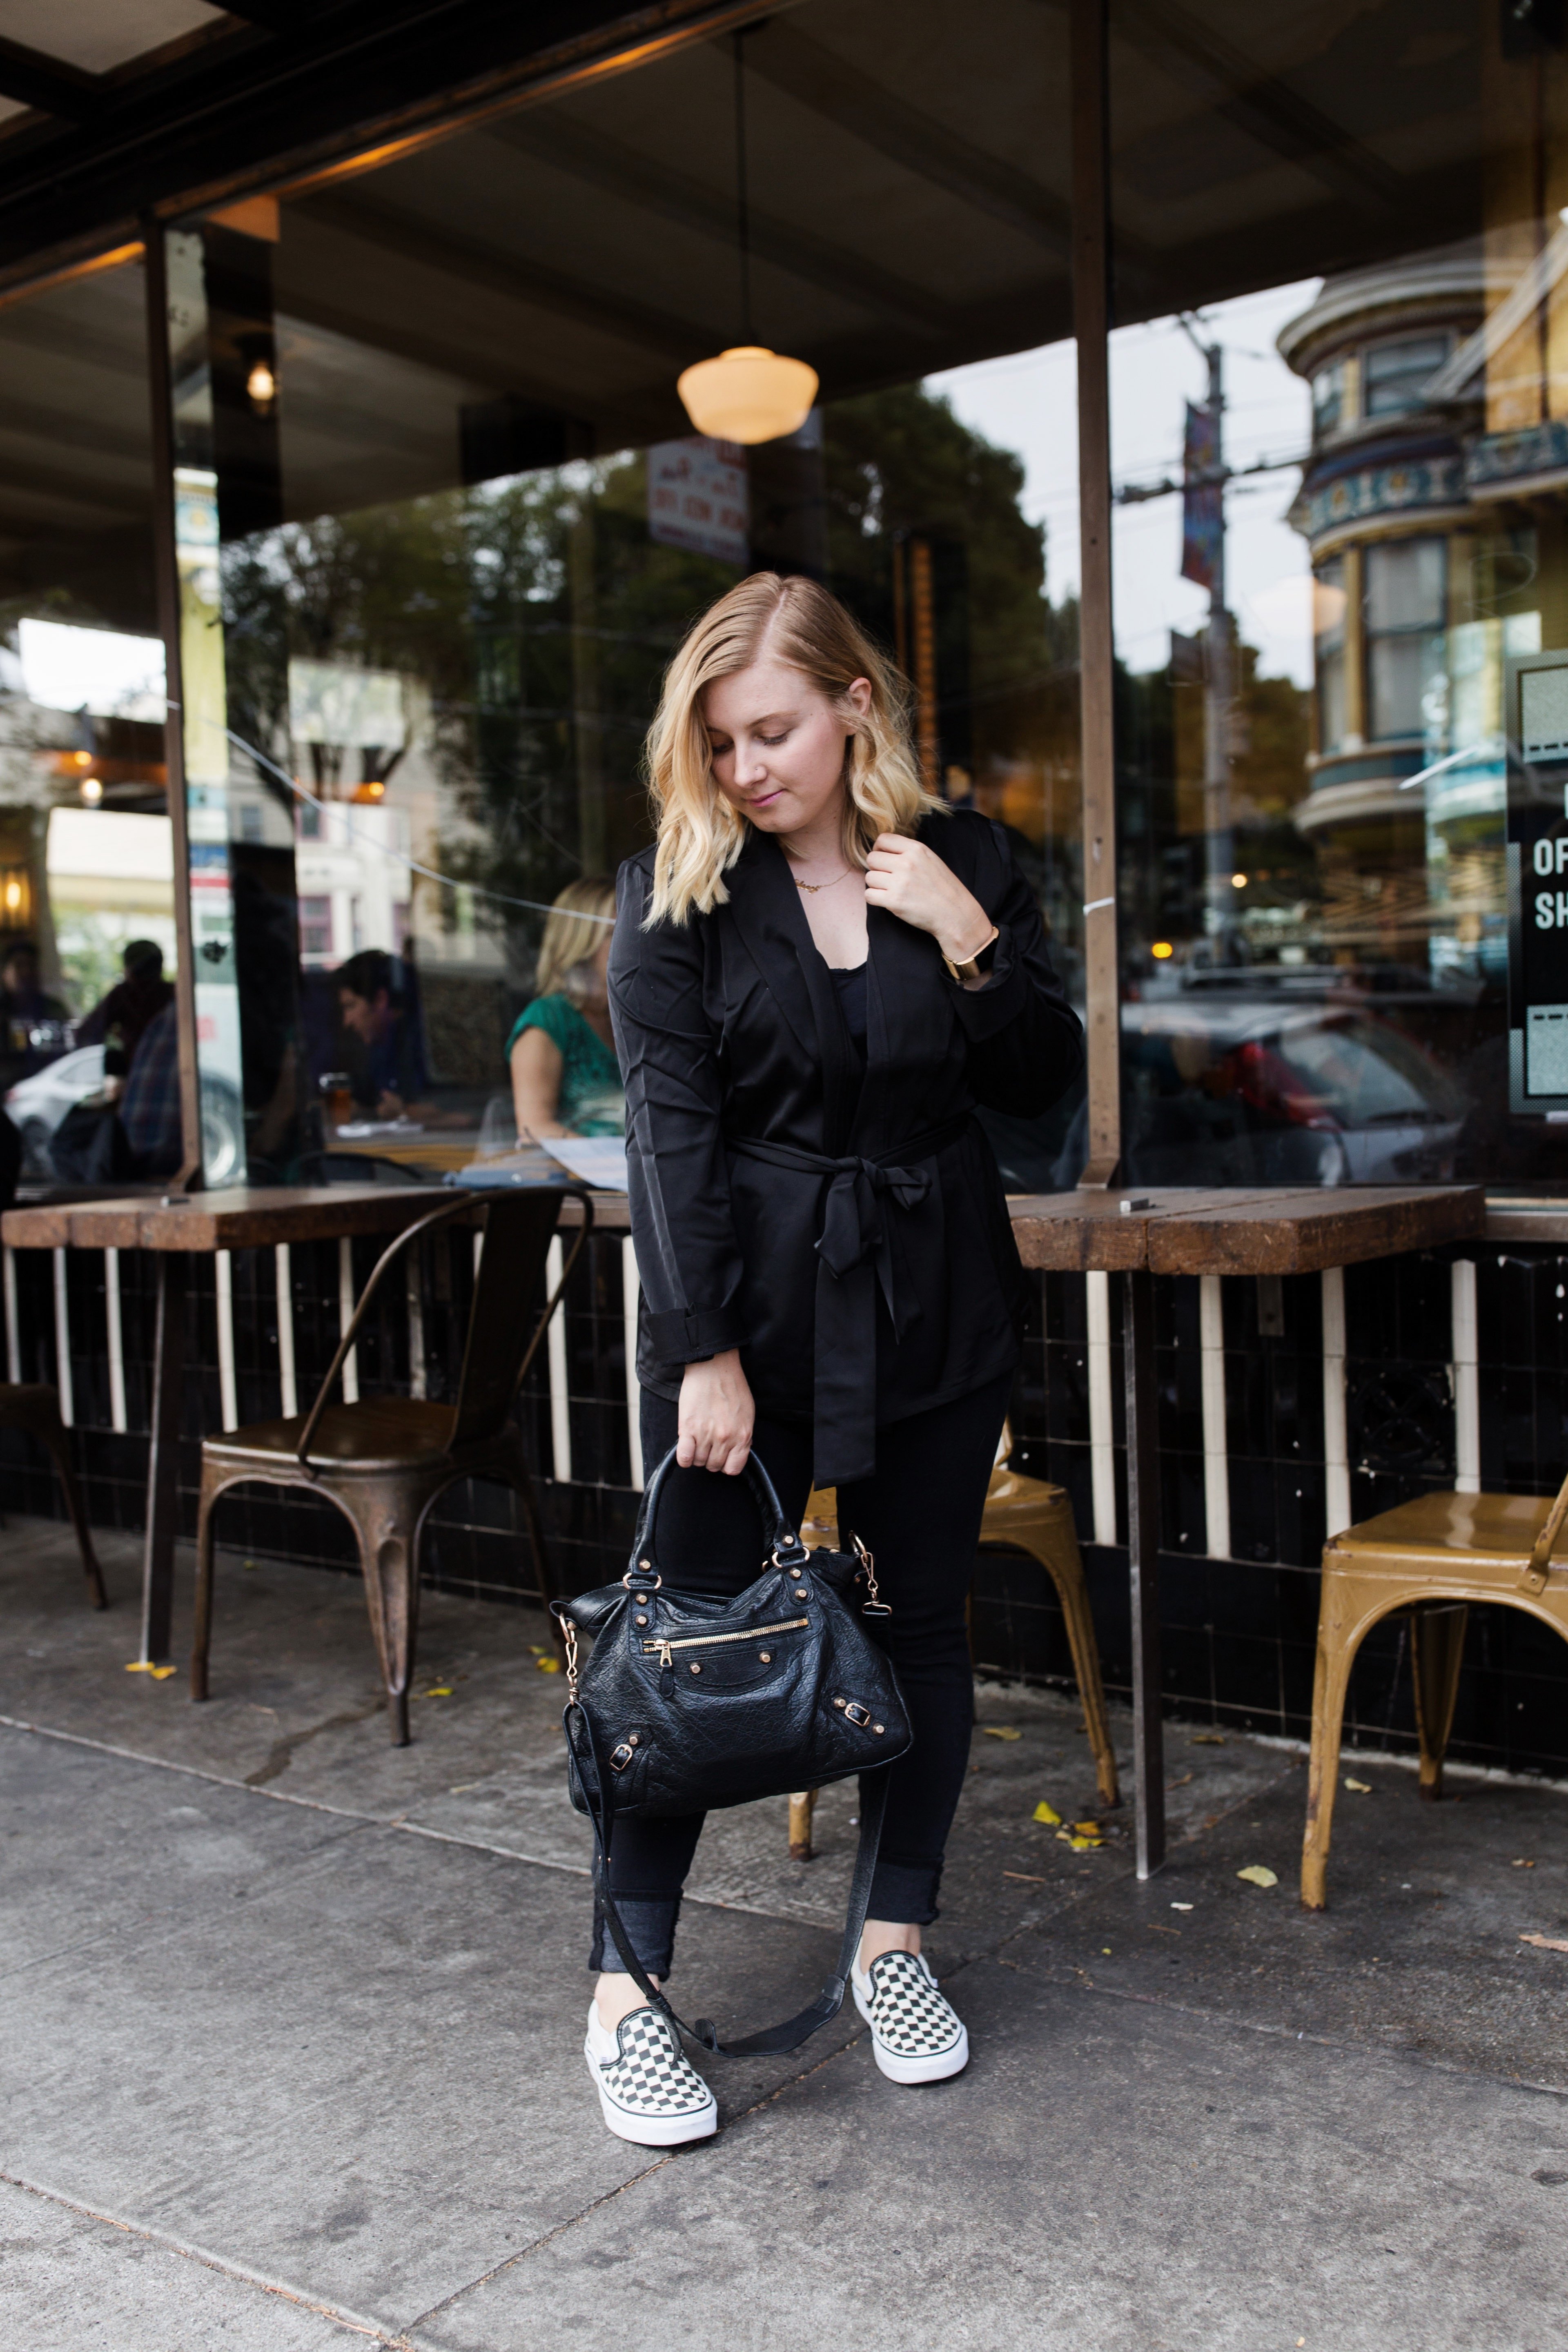 WESTBRONCO Women Leather Handbags Purses Designer Tote Shoulder Bag | eBay